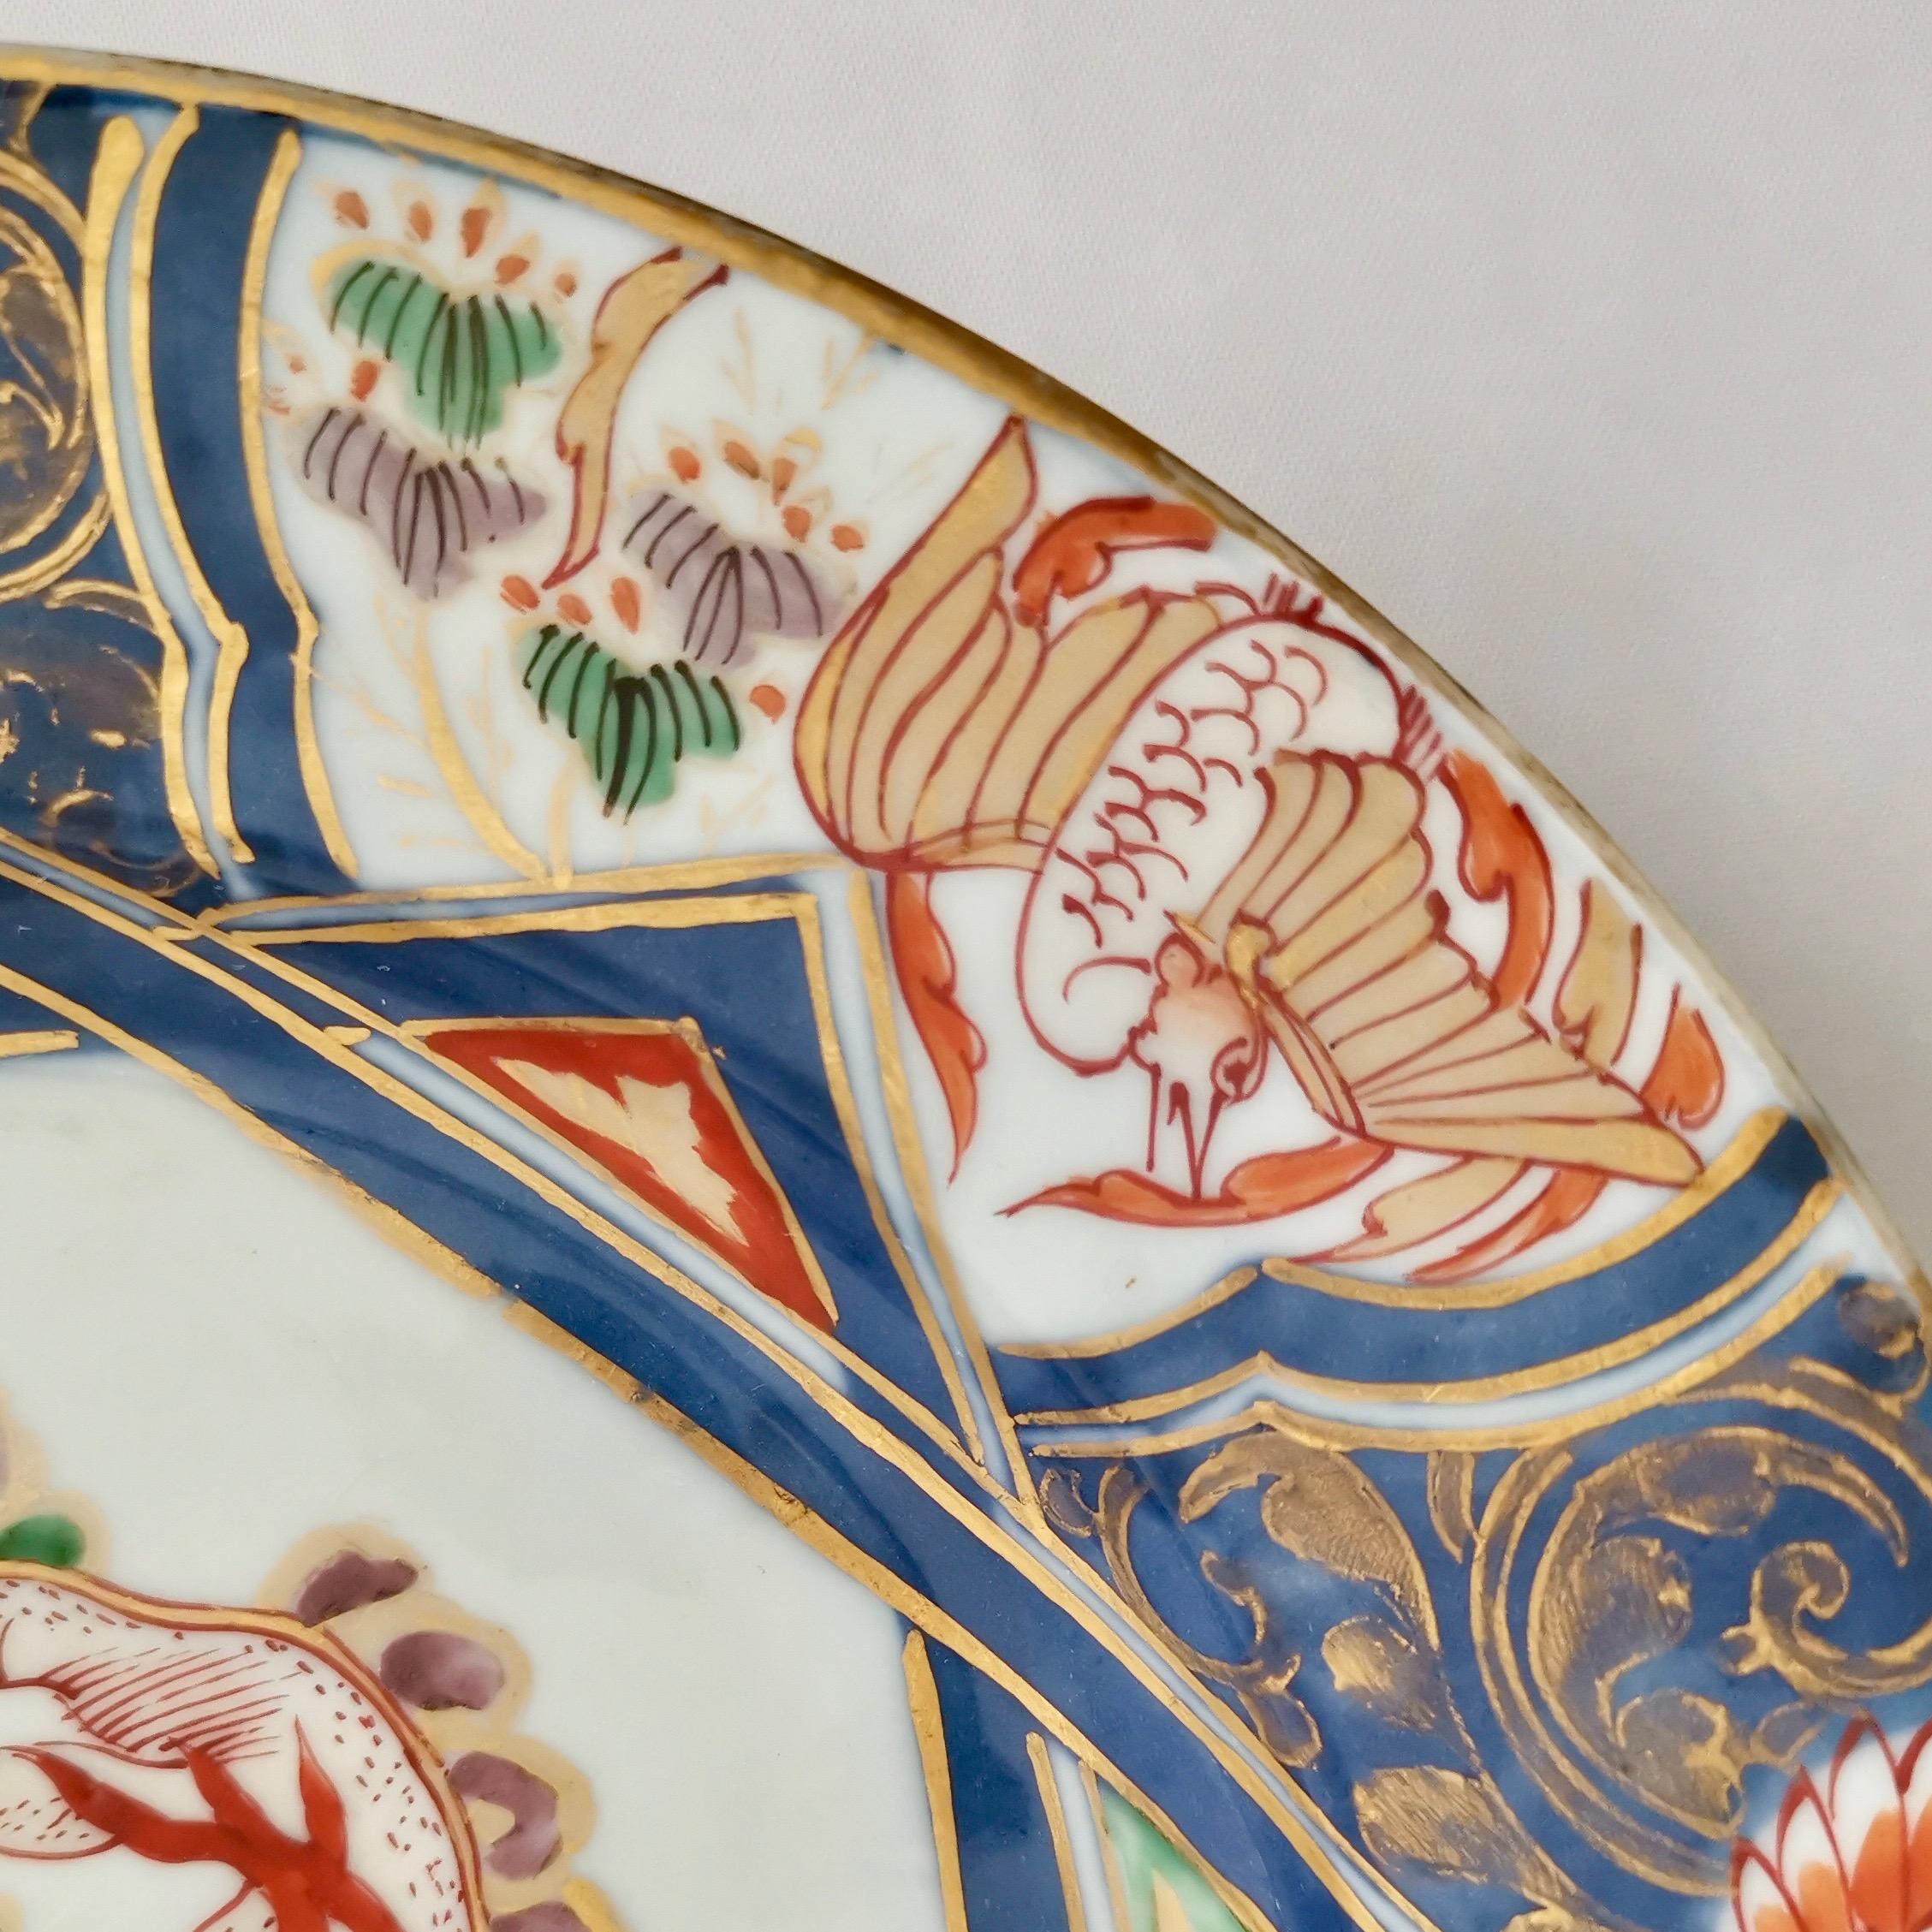 Japanese Imari Porcelain Plate with Dragon, Lions, Cranes, 17th C, Edo 1680-1700 2